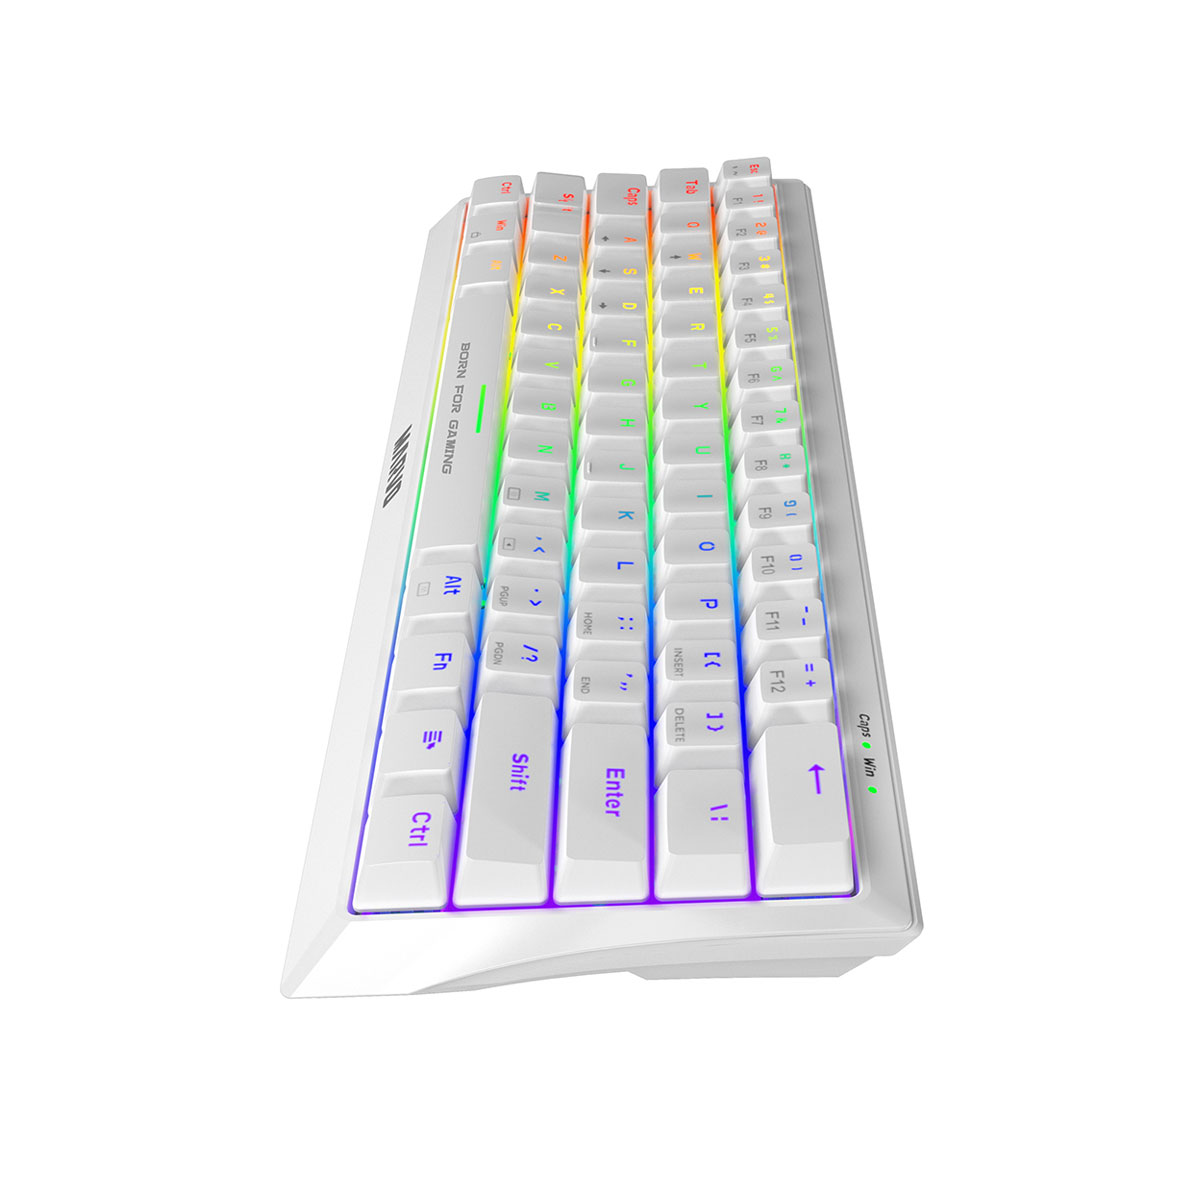 kg962wh-keyboard-03